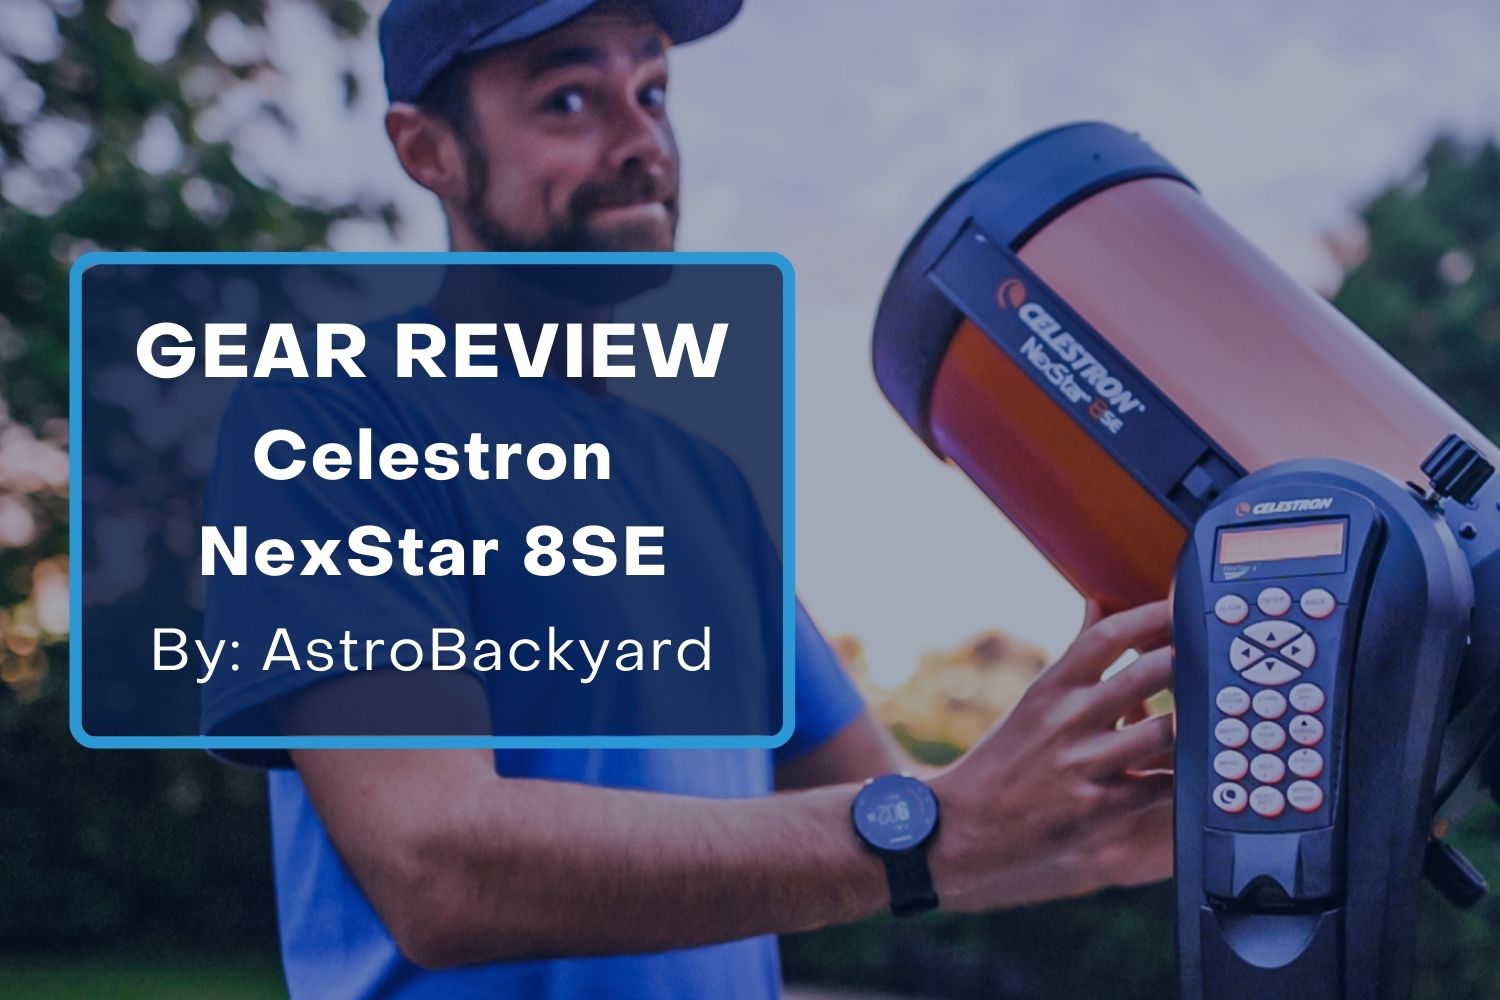 Celestron NexStar 8SE Review by AstroBackyard